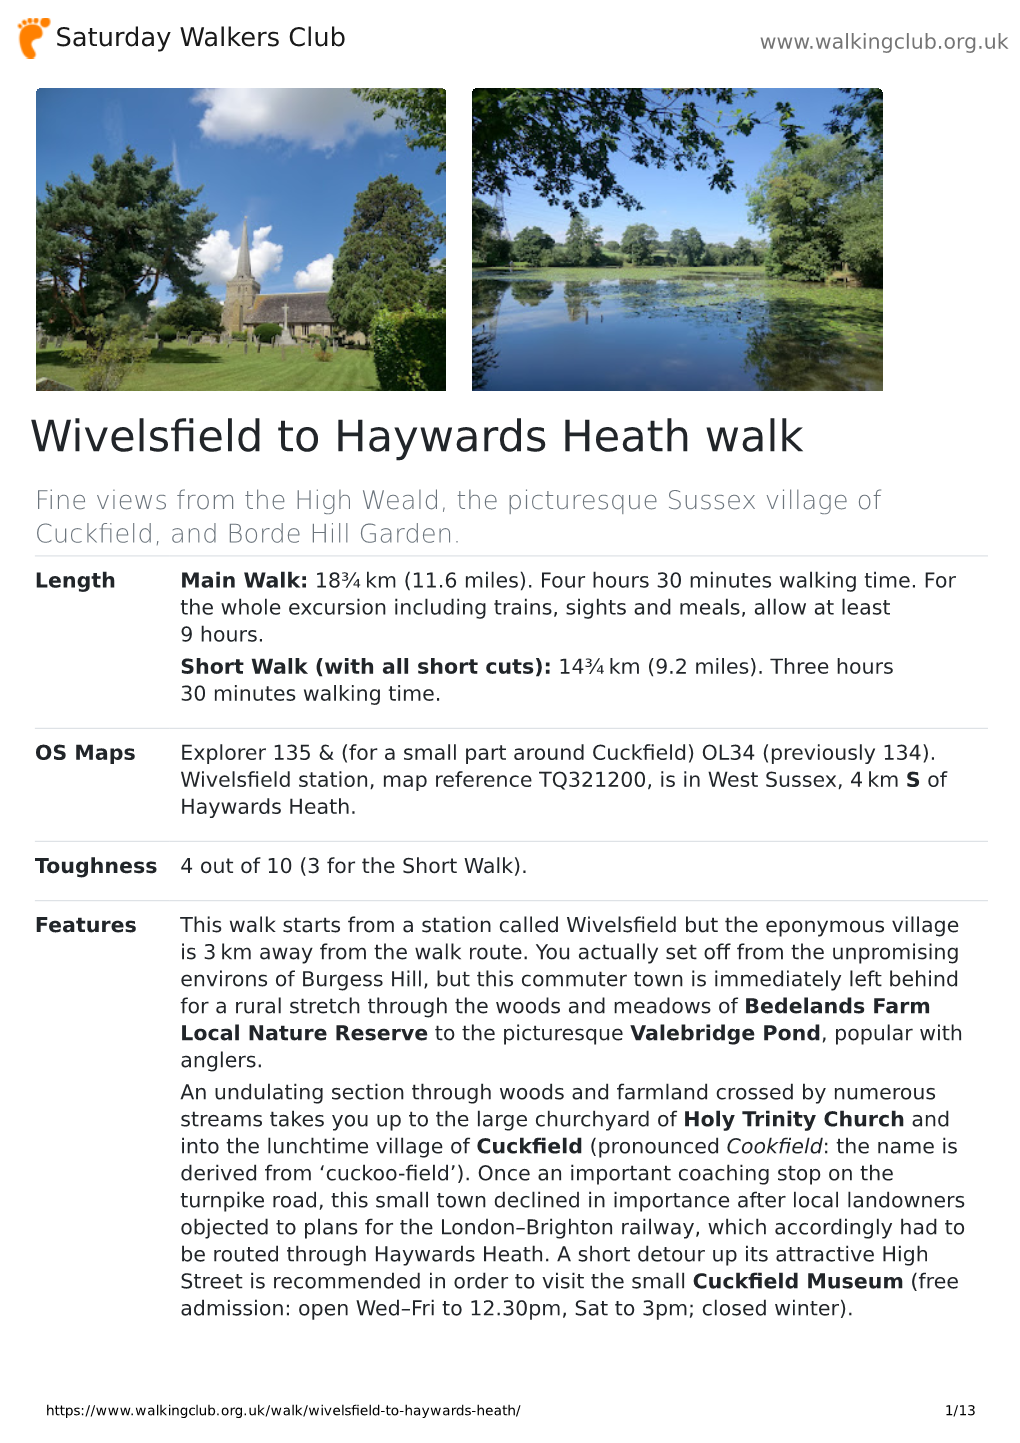 Wivelsfield to Haywards Heath Walk